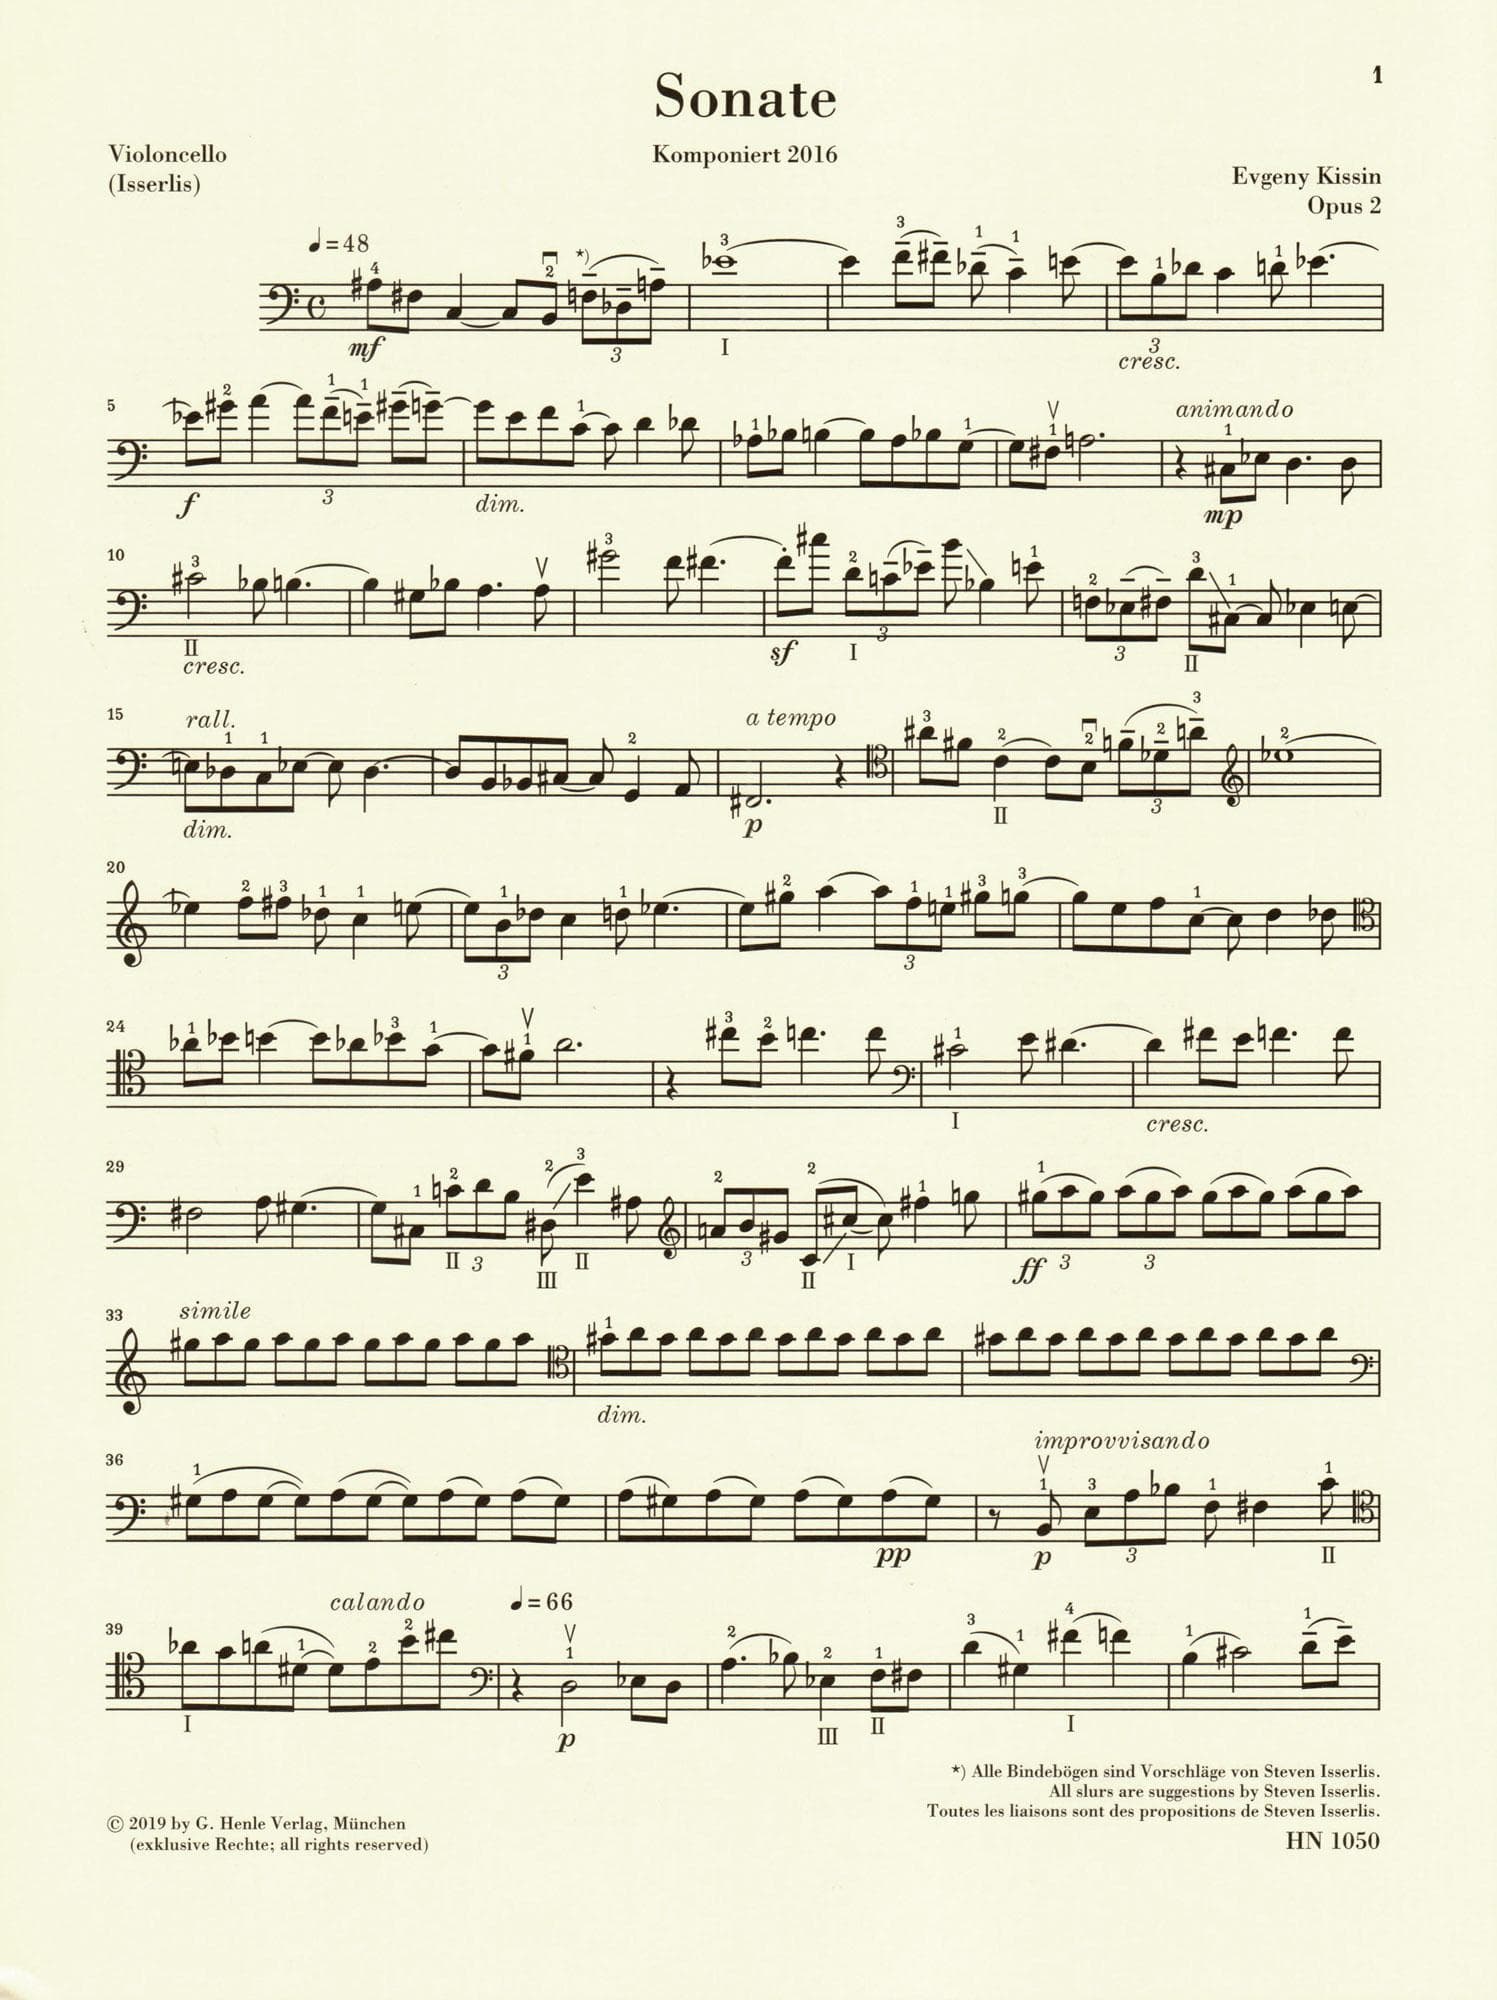 Kissin, Evgeny - Sonata, Opus 2 - for Cello and Piano - edited by Steven Isserlis - G. Henle Verlag URTEXT